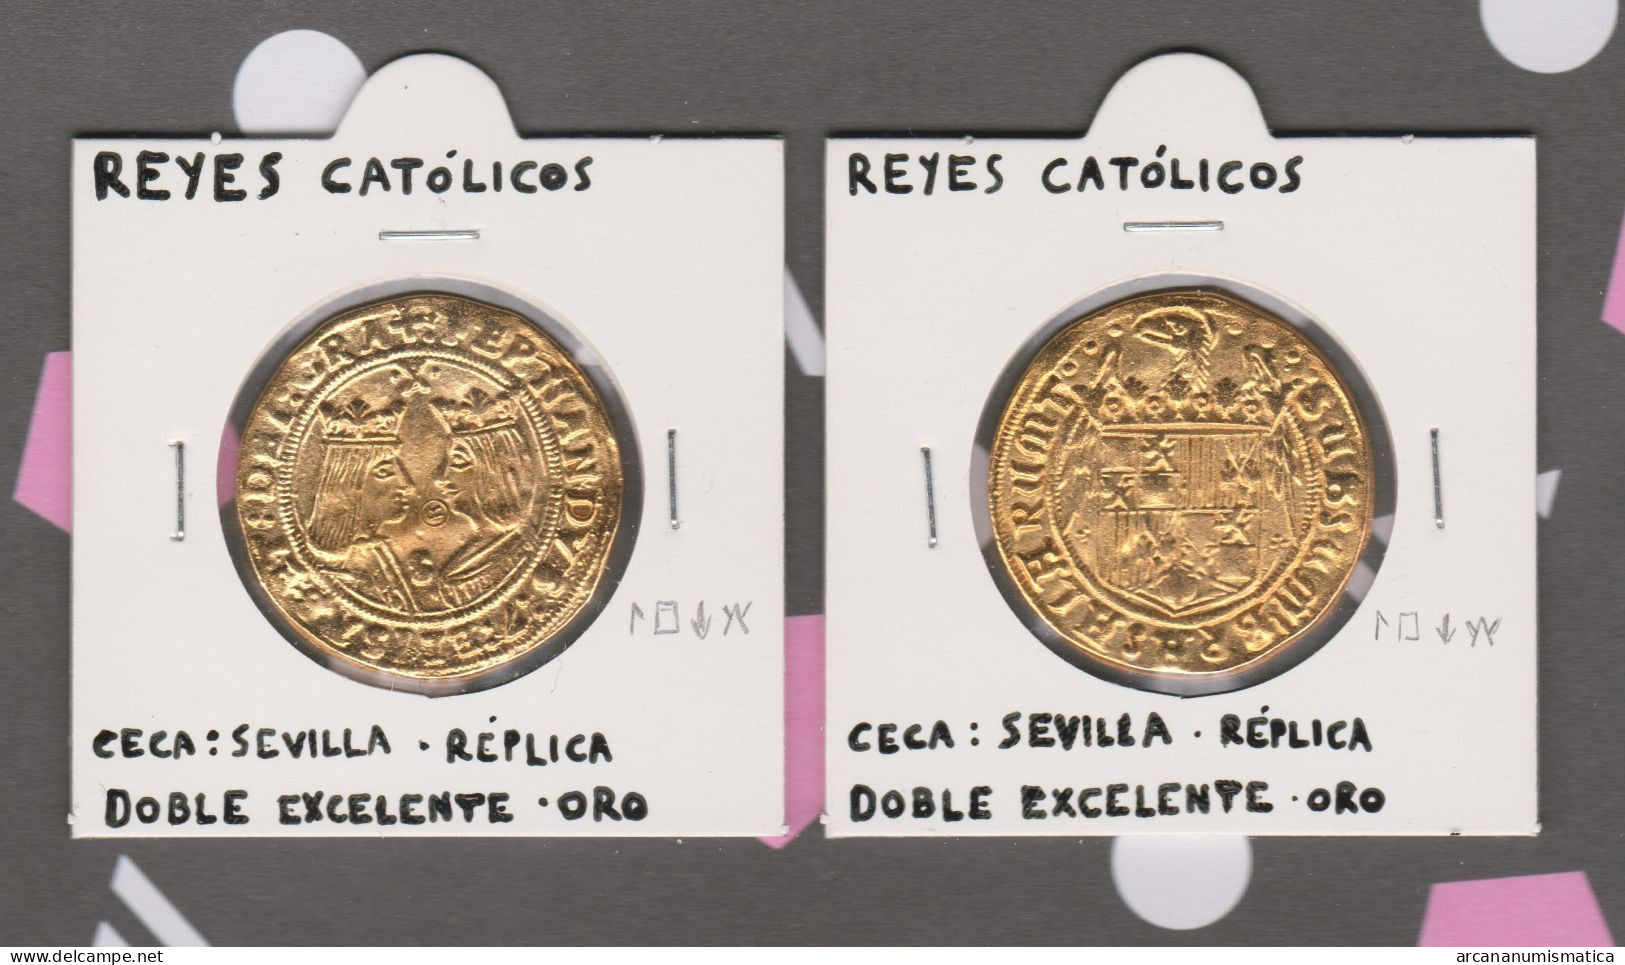 REYES CATOLICOS  DOBLE EXCELENTE - ORO CECA: SEVILLA  Réplica   T-DL-13.434 - Valse Munten